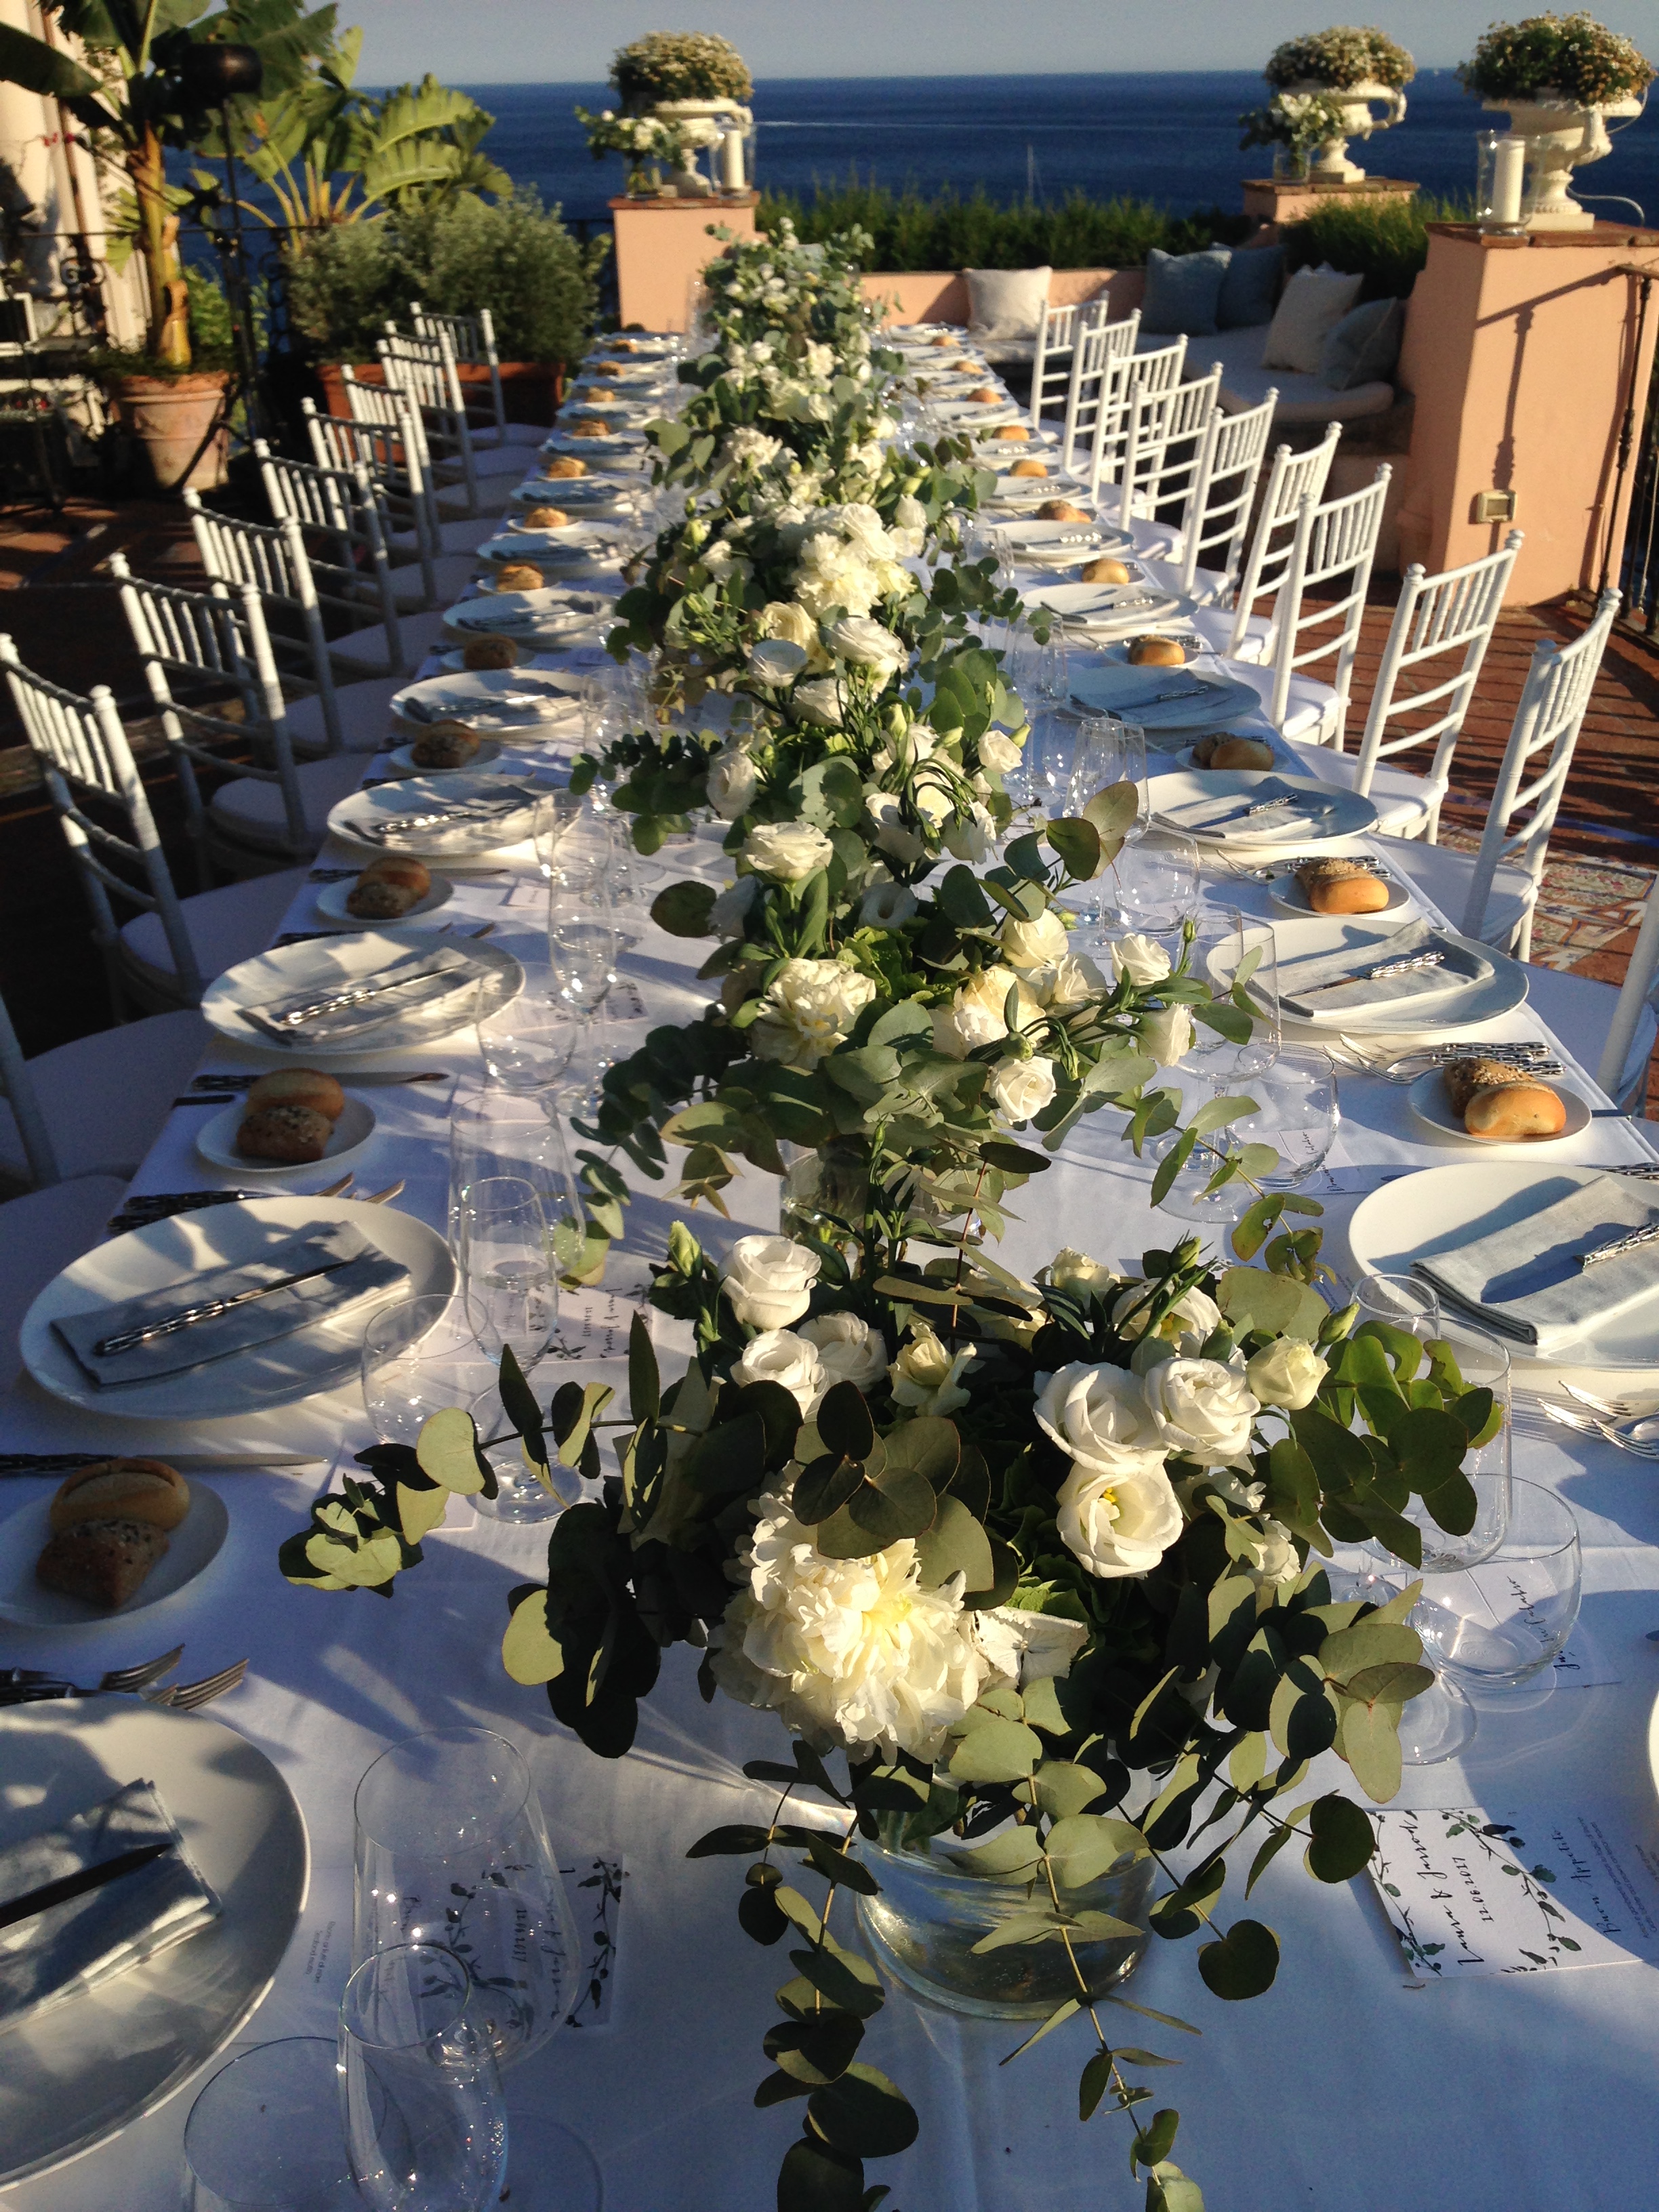 https://www.weddingamalfi.com/wp-content/uploads/Laura-and-Jarrod-wedding-table-decorations-with-fresh-flowers.jpg